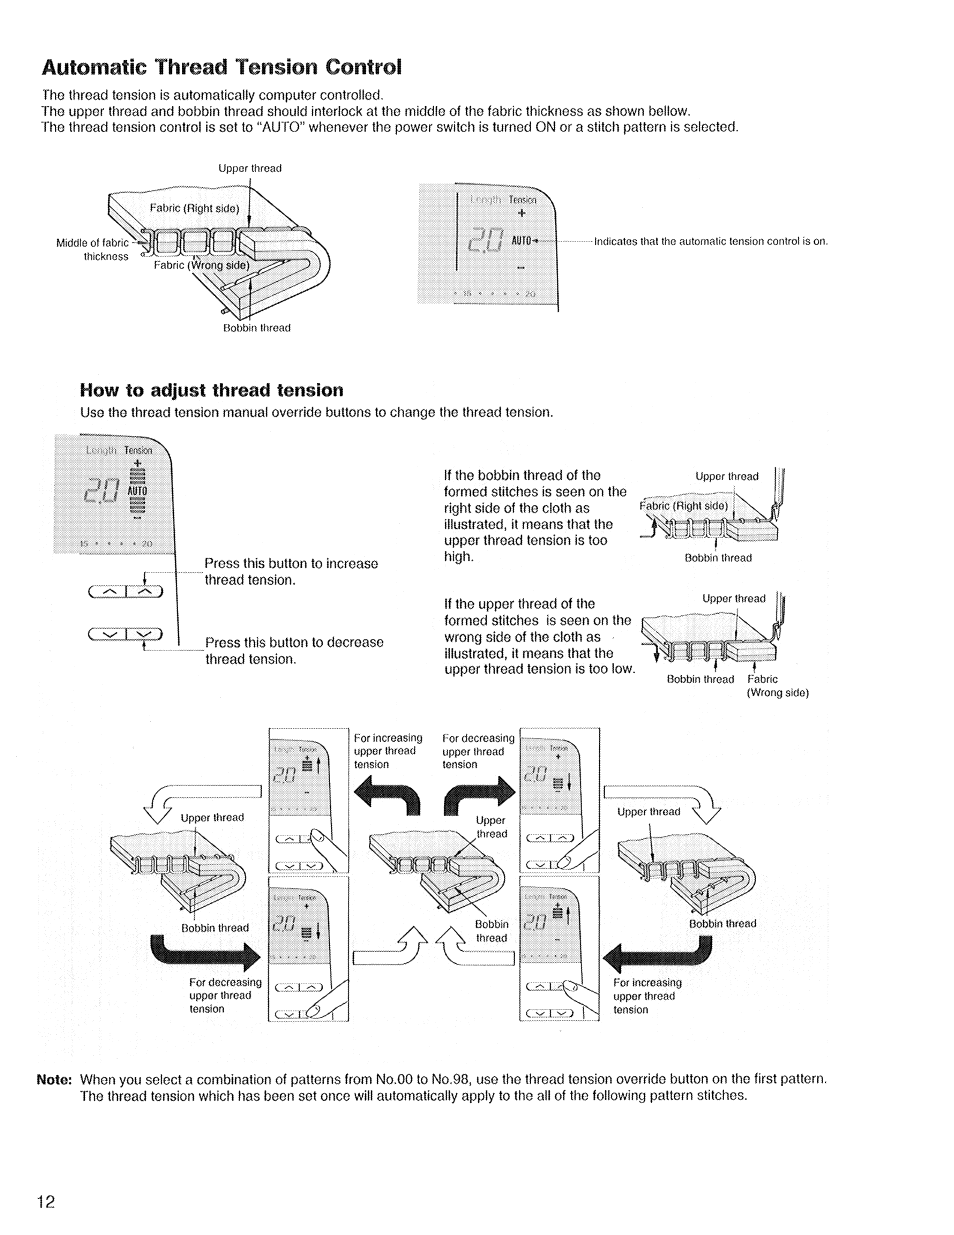 Automatic thread tensiori control, Automatic thread tension control, Ao g | SINGER XL1 Quantum User Manual | Page 14 / 48